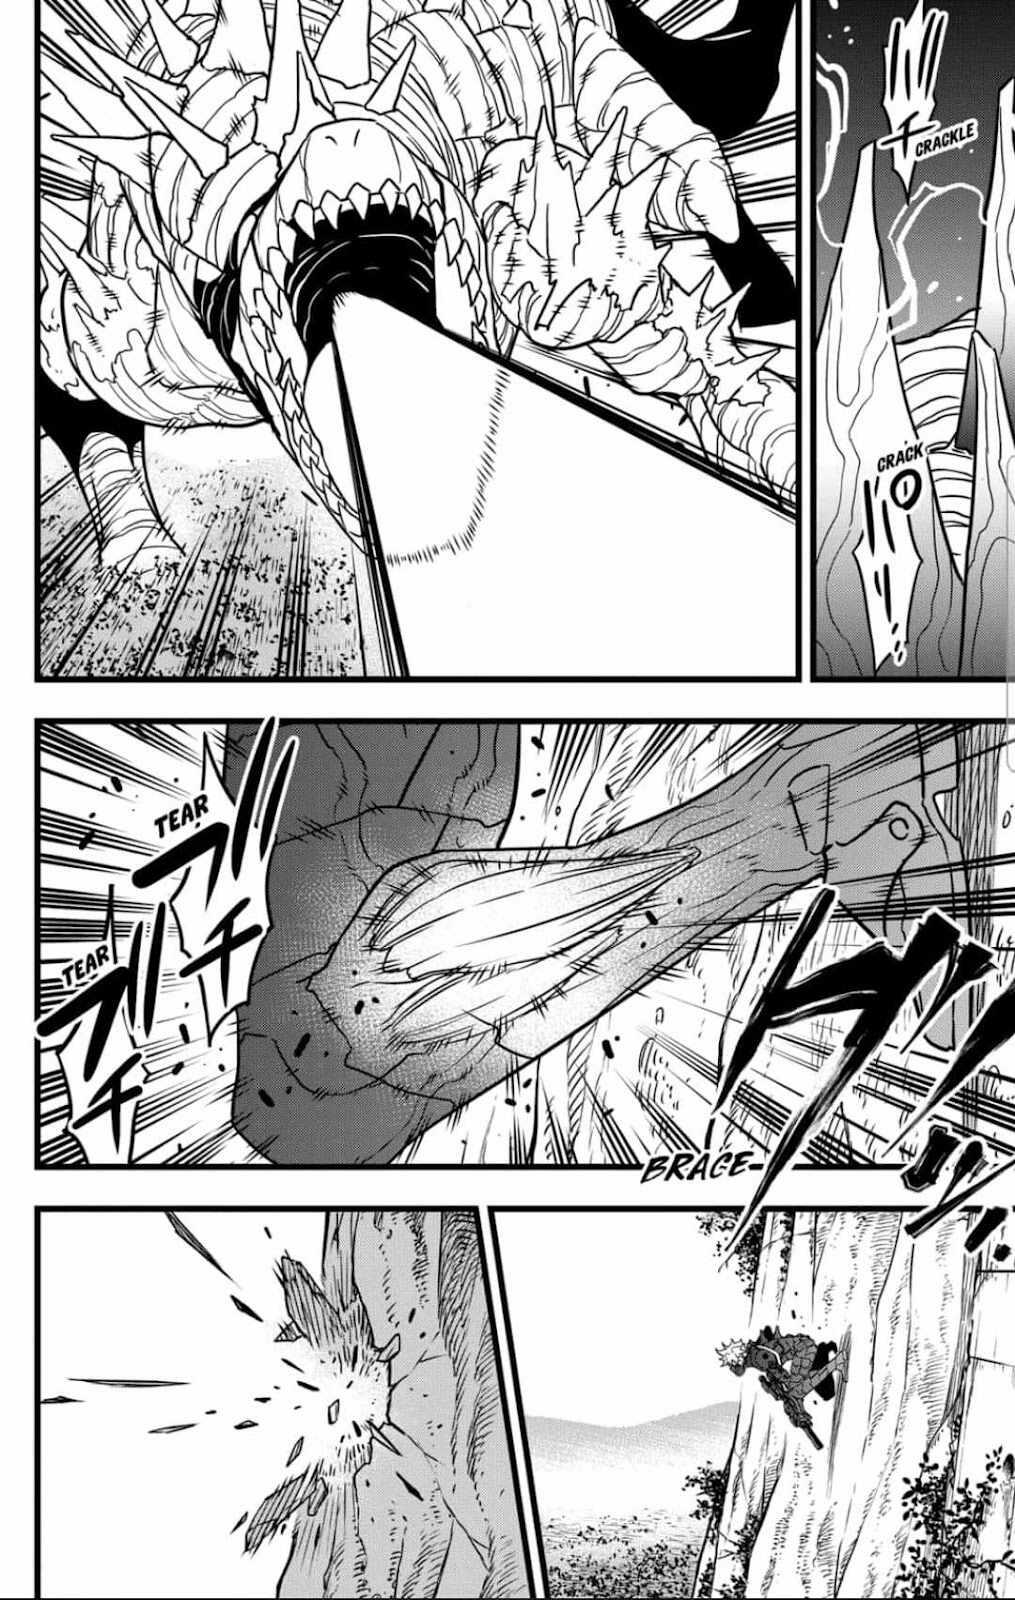 Kaiju No. 8 Chapter 62 page 4 - Mangakakalot